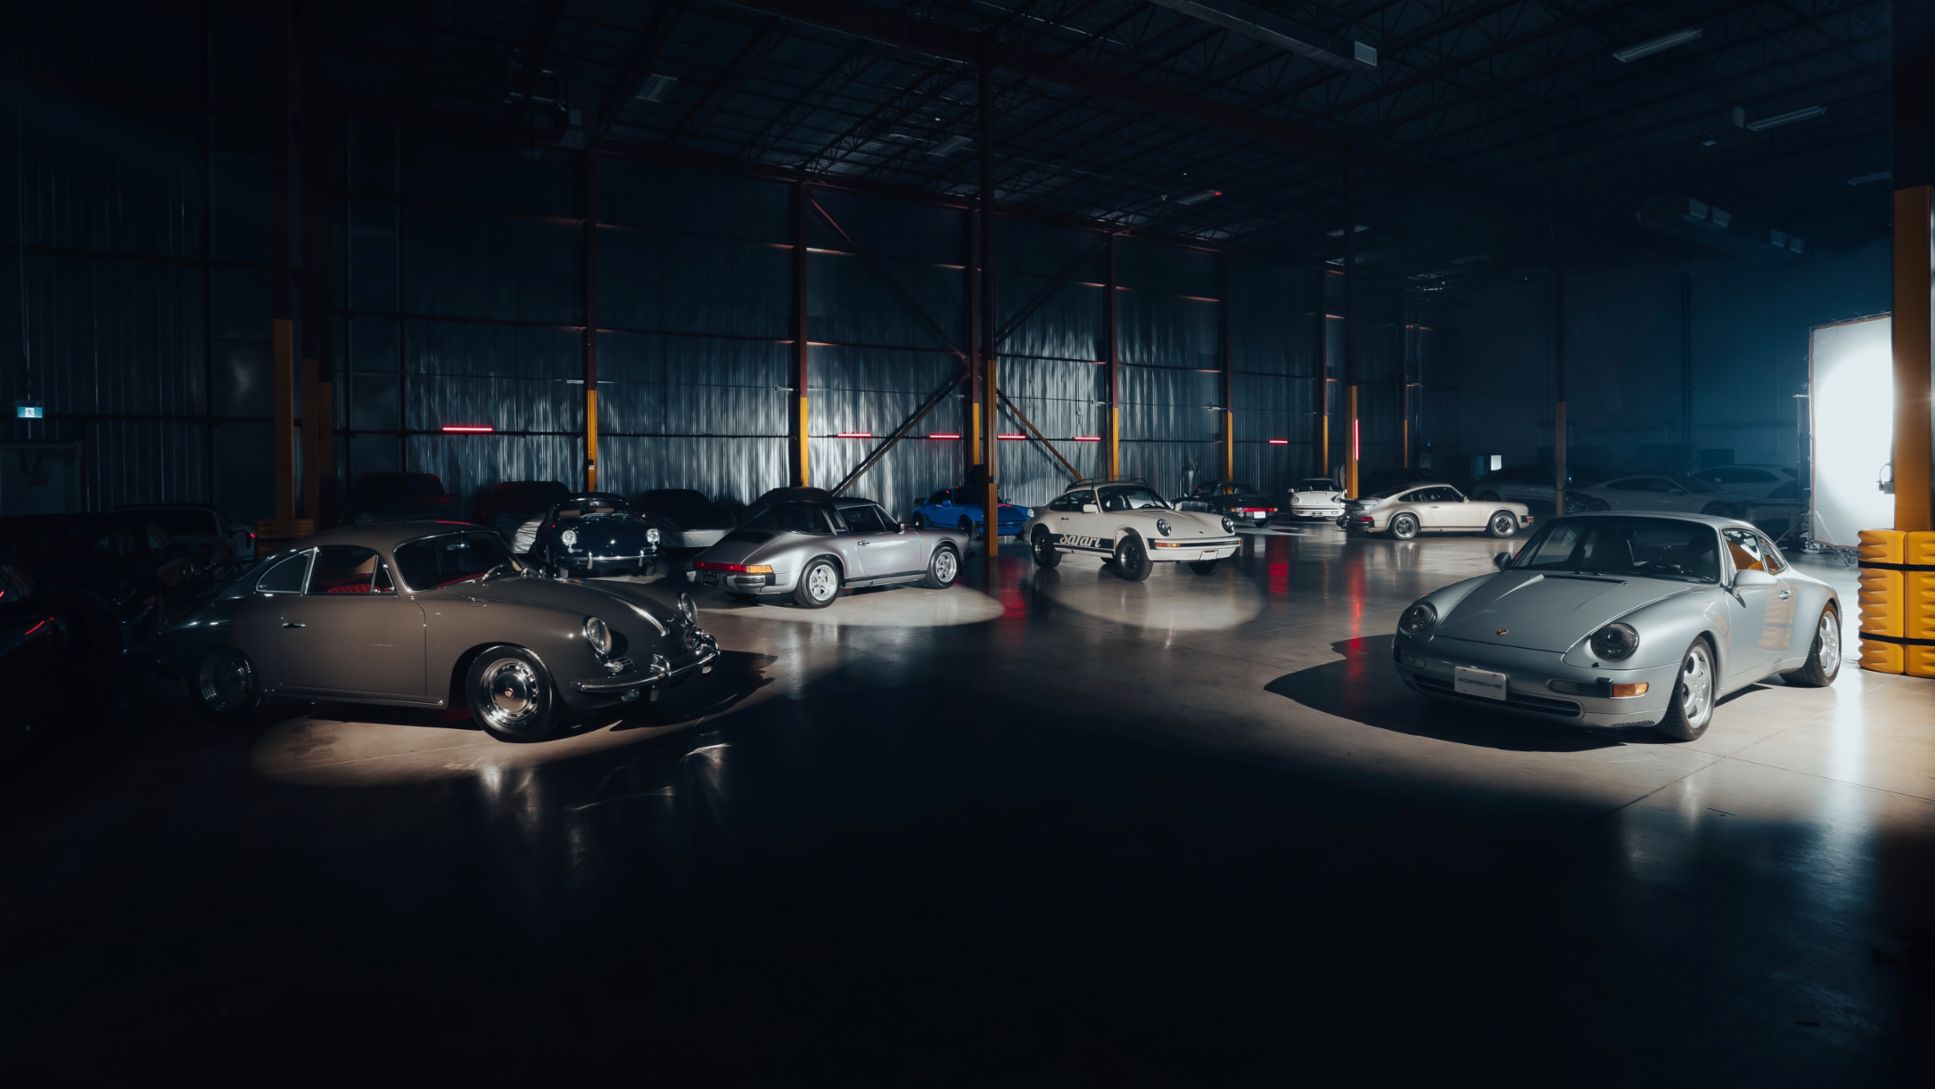 911, 356, Porsche Classic Restoration Competition, Mississauga Ontario, 2022, Porsche AG